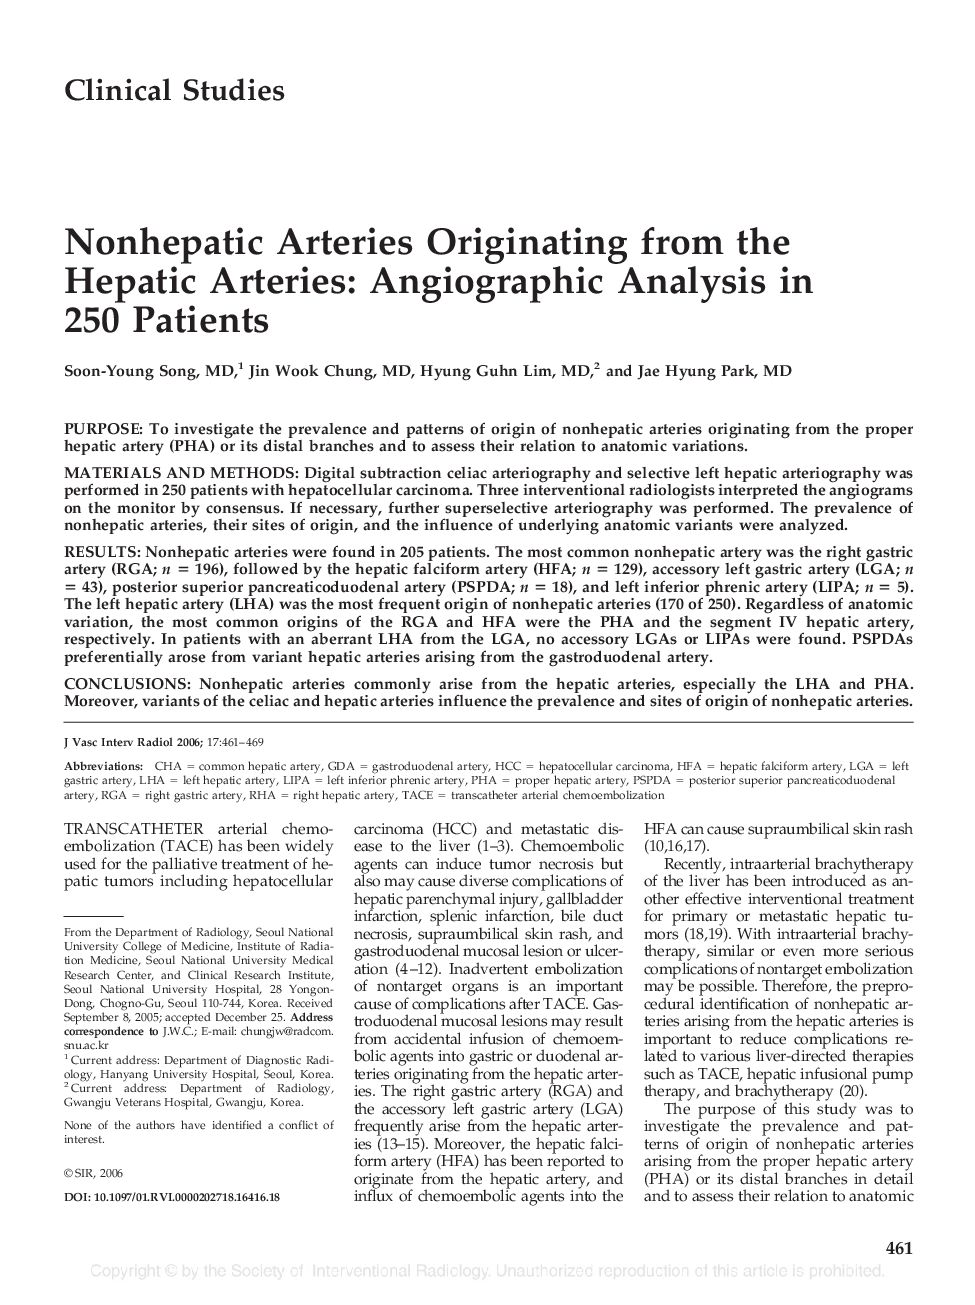 Nonhepatic Arteries Originating from the Hepatic Arteries: Angiographic Analysis in 250 Patients